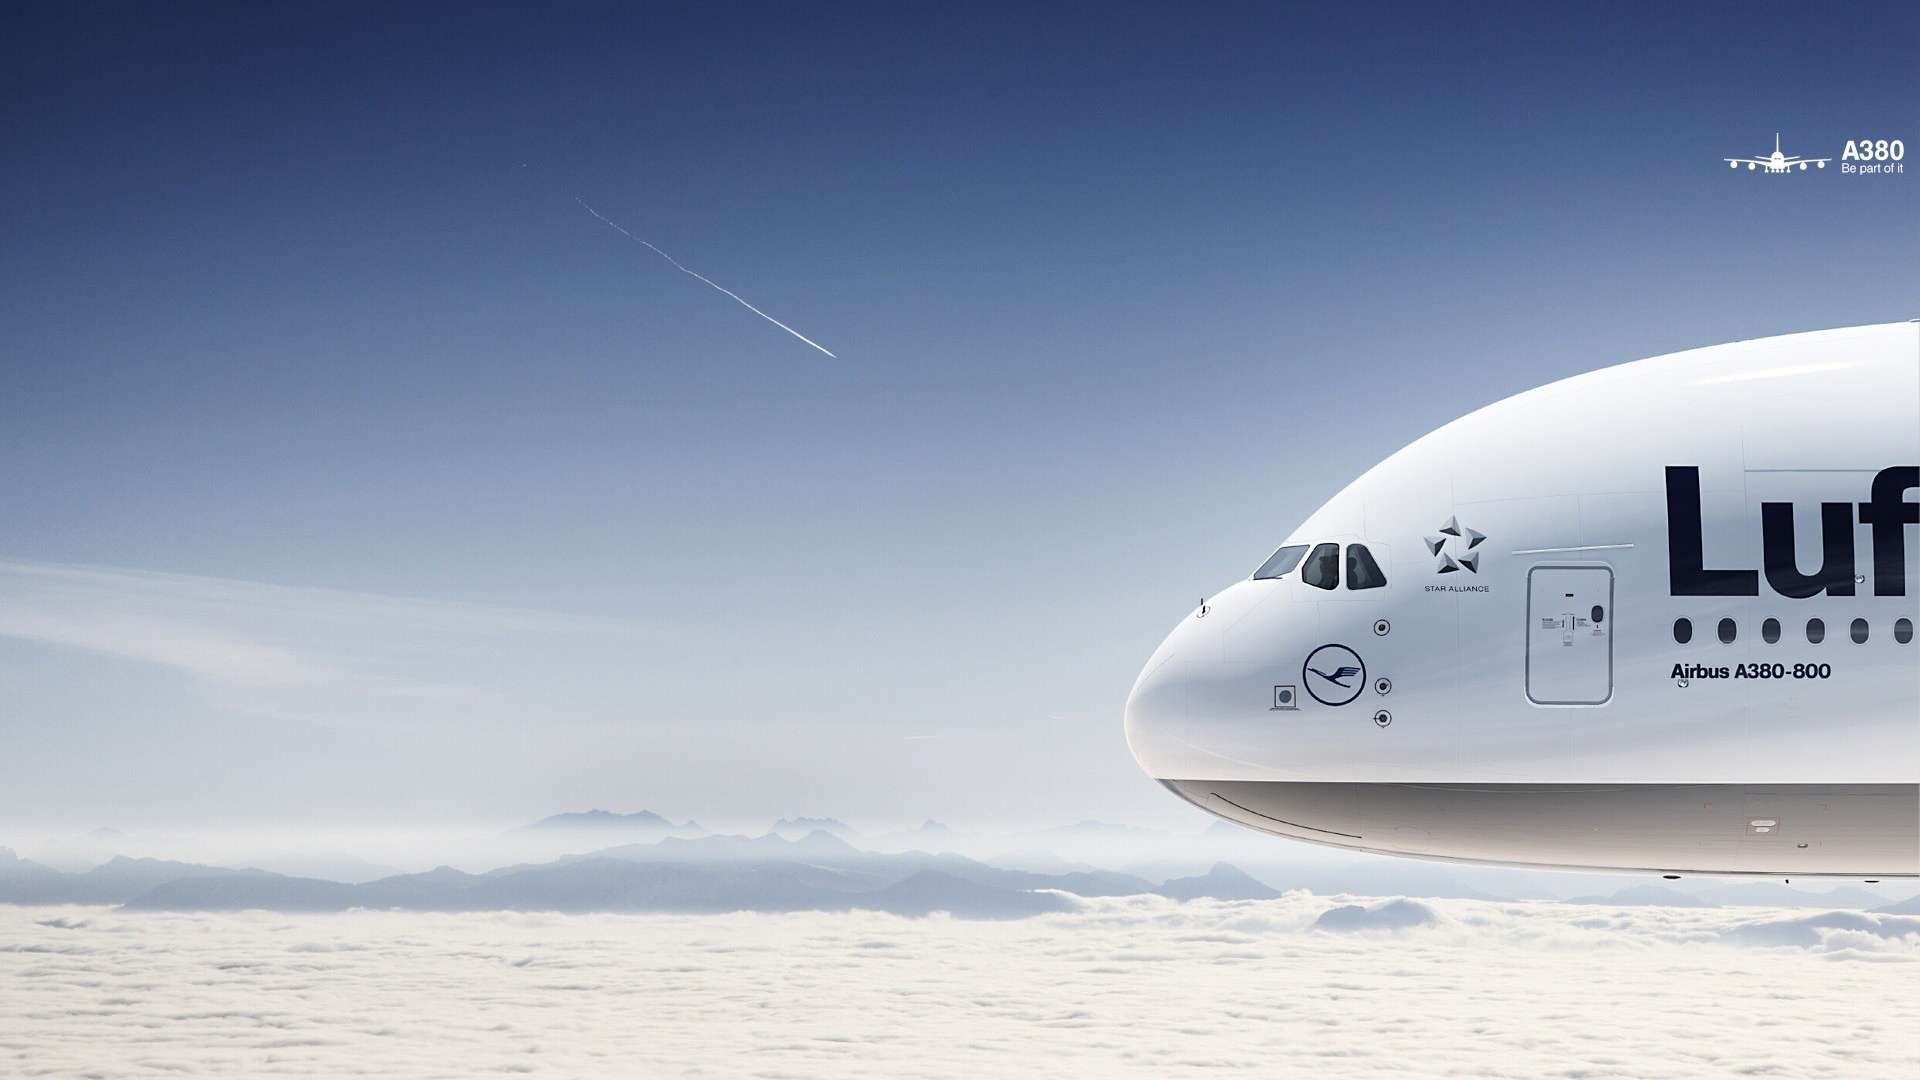 Airbus A380 Lufthansa Clouds HD Wallpaper FullHDwpp Full